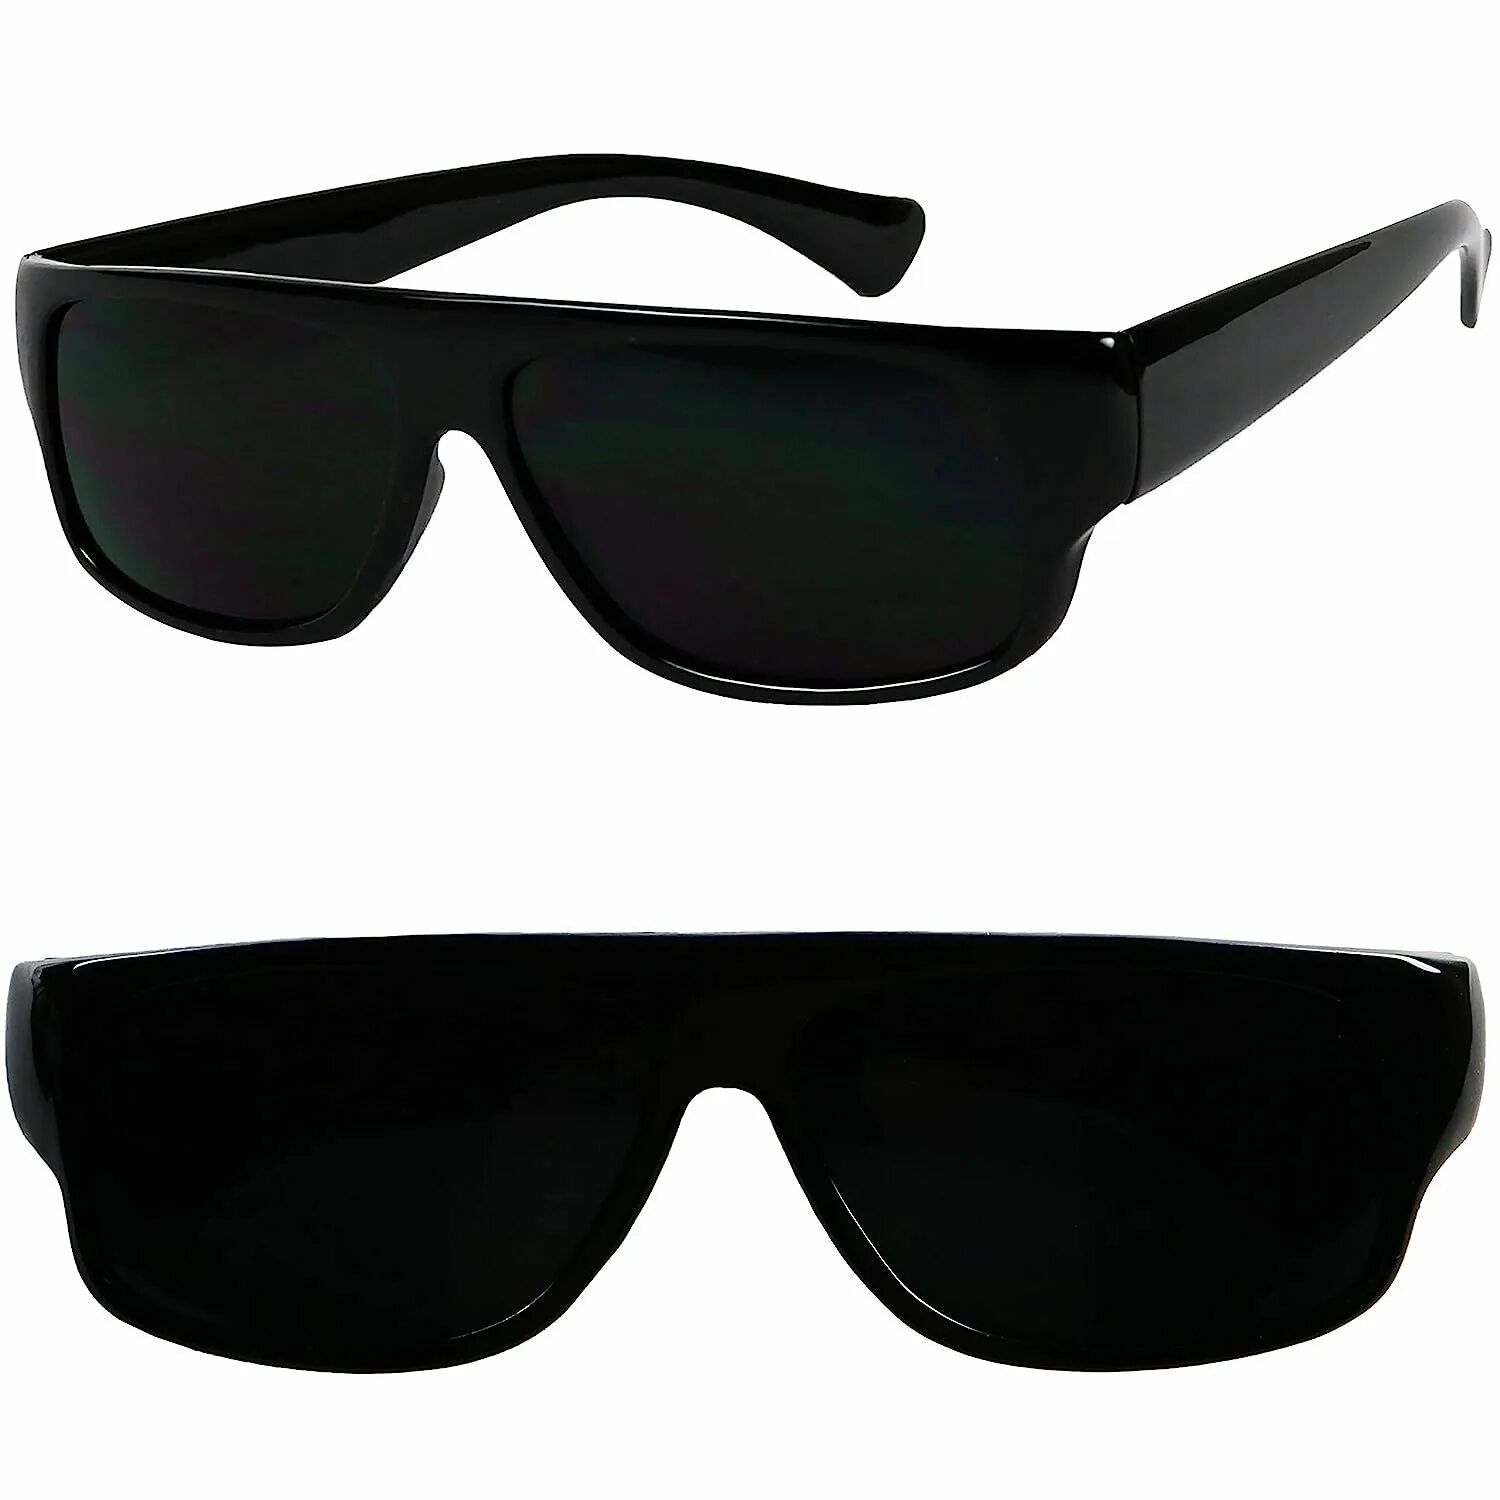 Купить затемненные очки. Очки locs Eazy e. Очки Cyclone Black Sunglasses. Armani UV Protection очки. Очки корда сунглассес Классик.